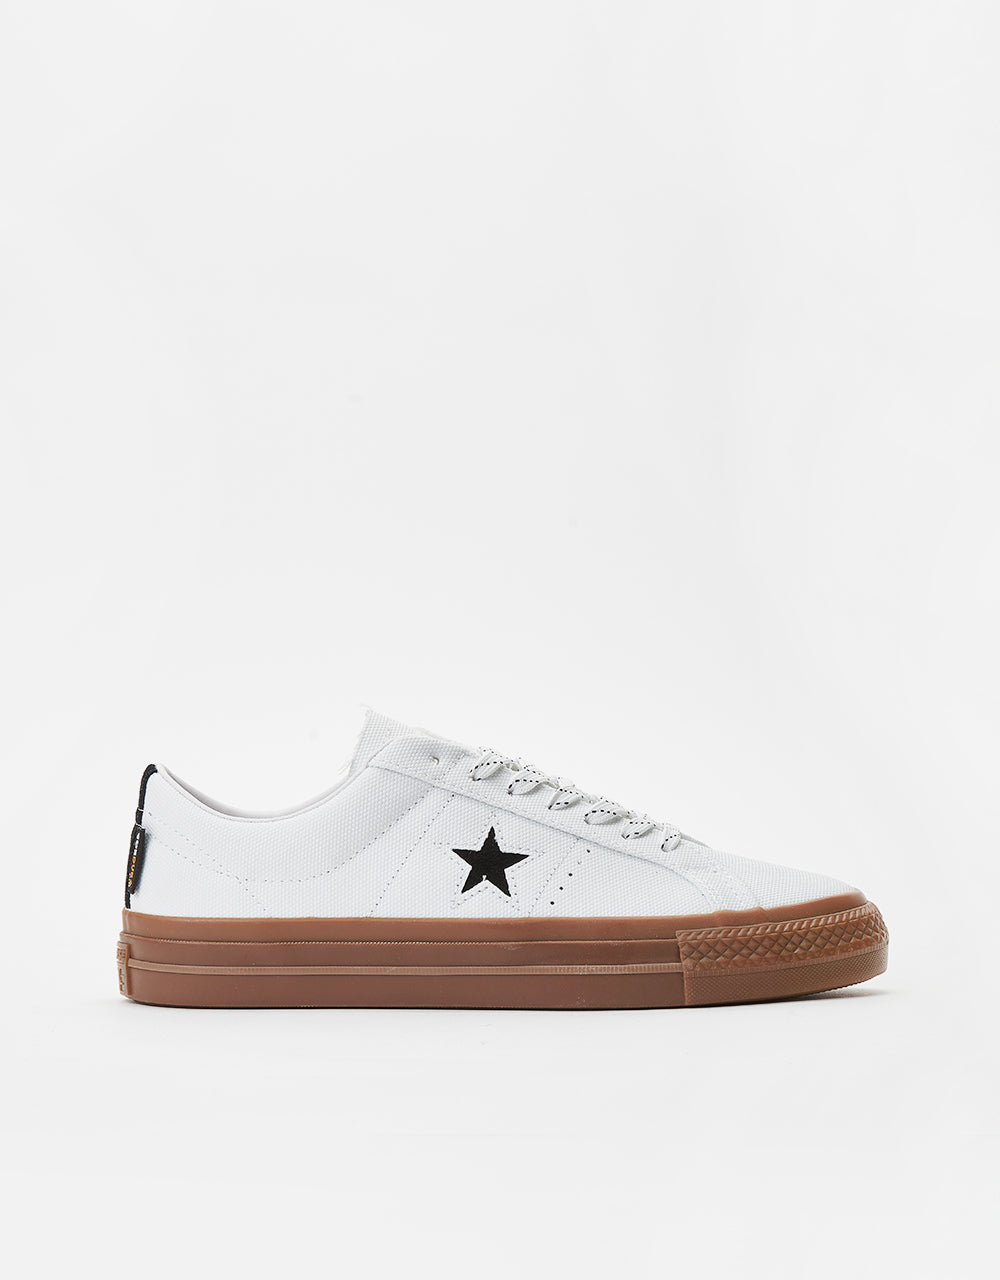 Converse One Star Pro Cordura Canvas Skate Shoes - White/Black/Dark Gum